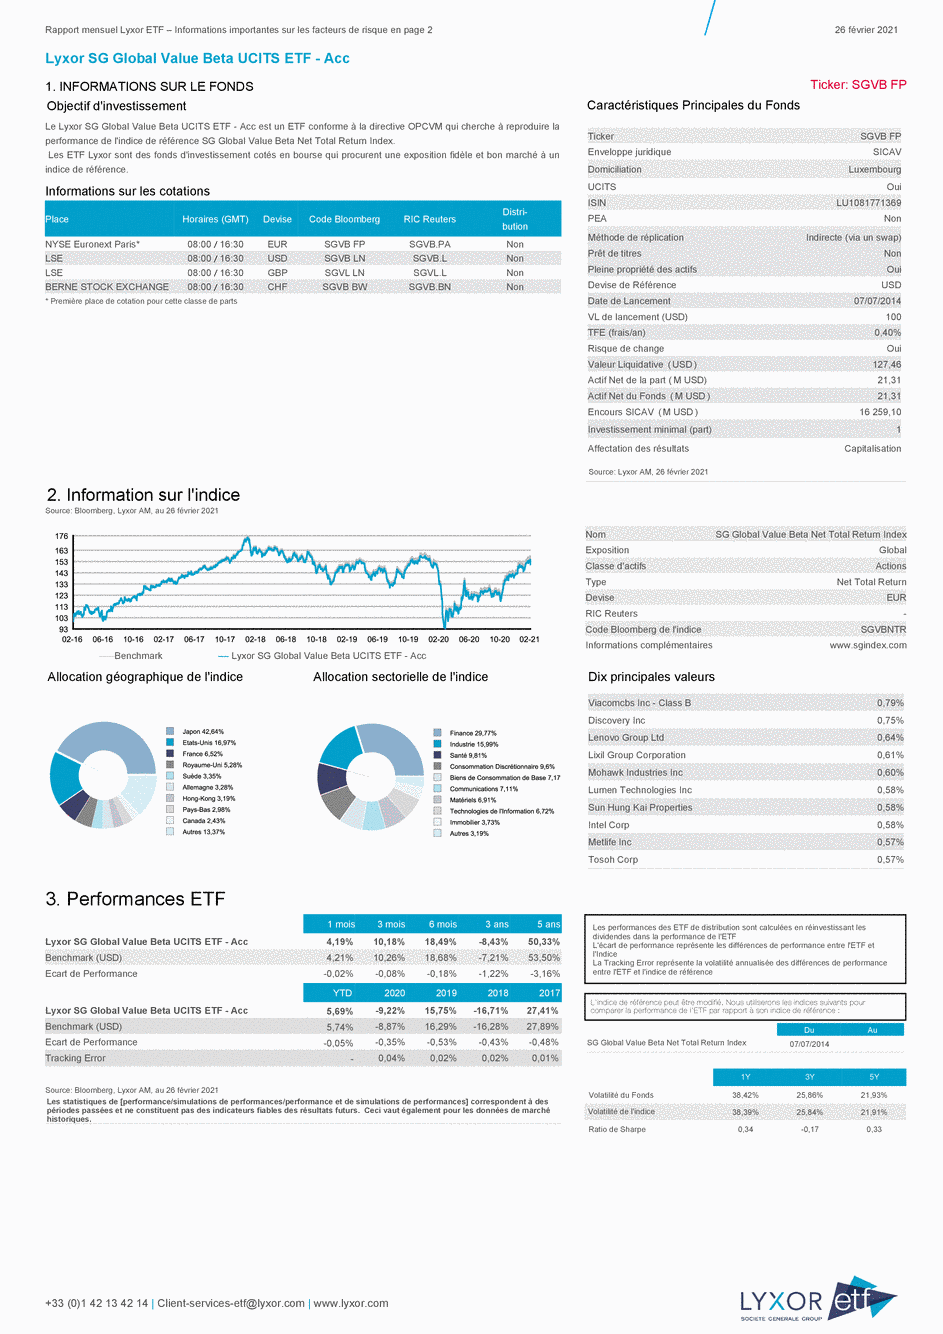 Reporting Lyxor SG Global Value Beta UCITS ETF - Acc - 26/02/2021 - Français